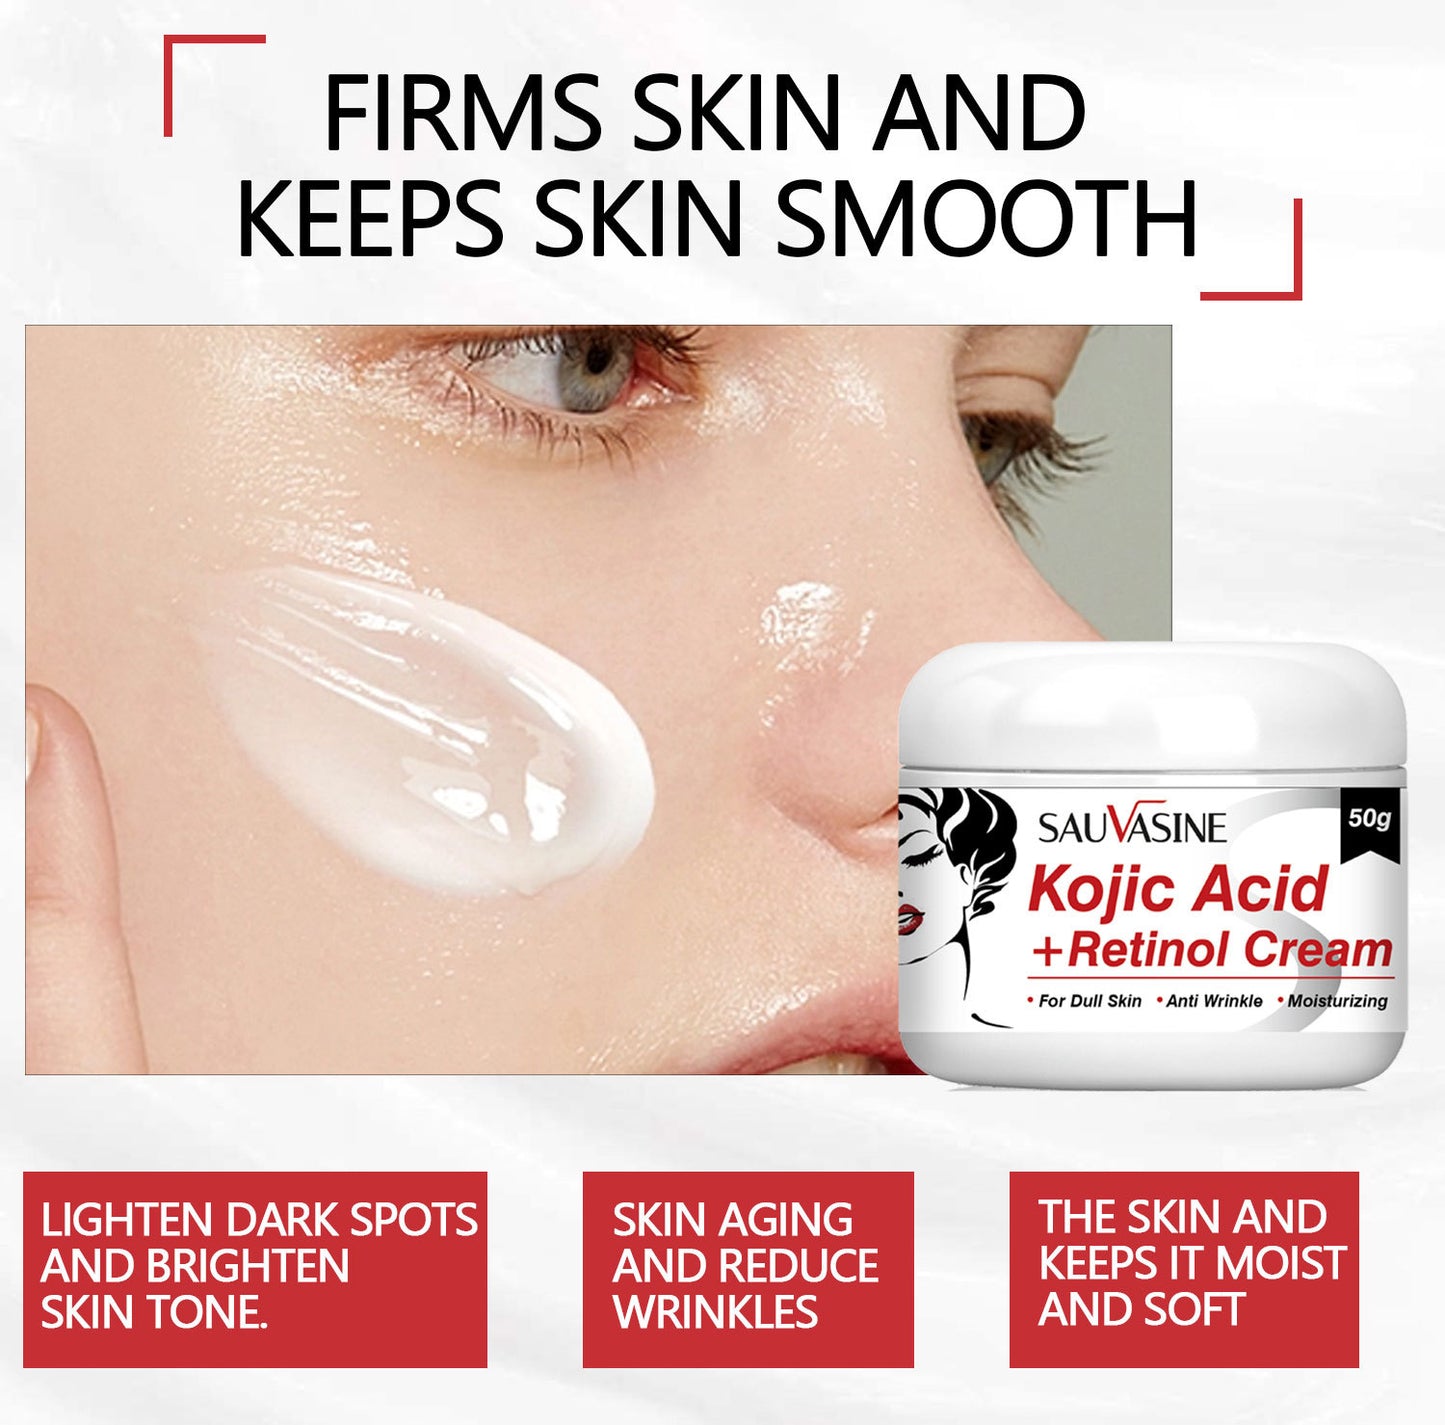 Wholesale Kojic Acid Face Cream, Moisturizing, Brightening Skin Tone, Removing Black Spots 393